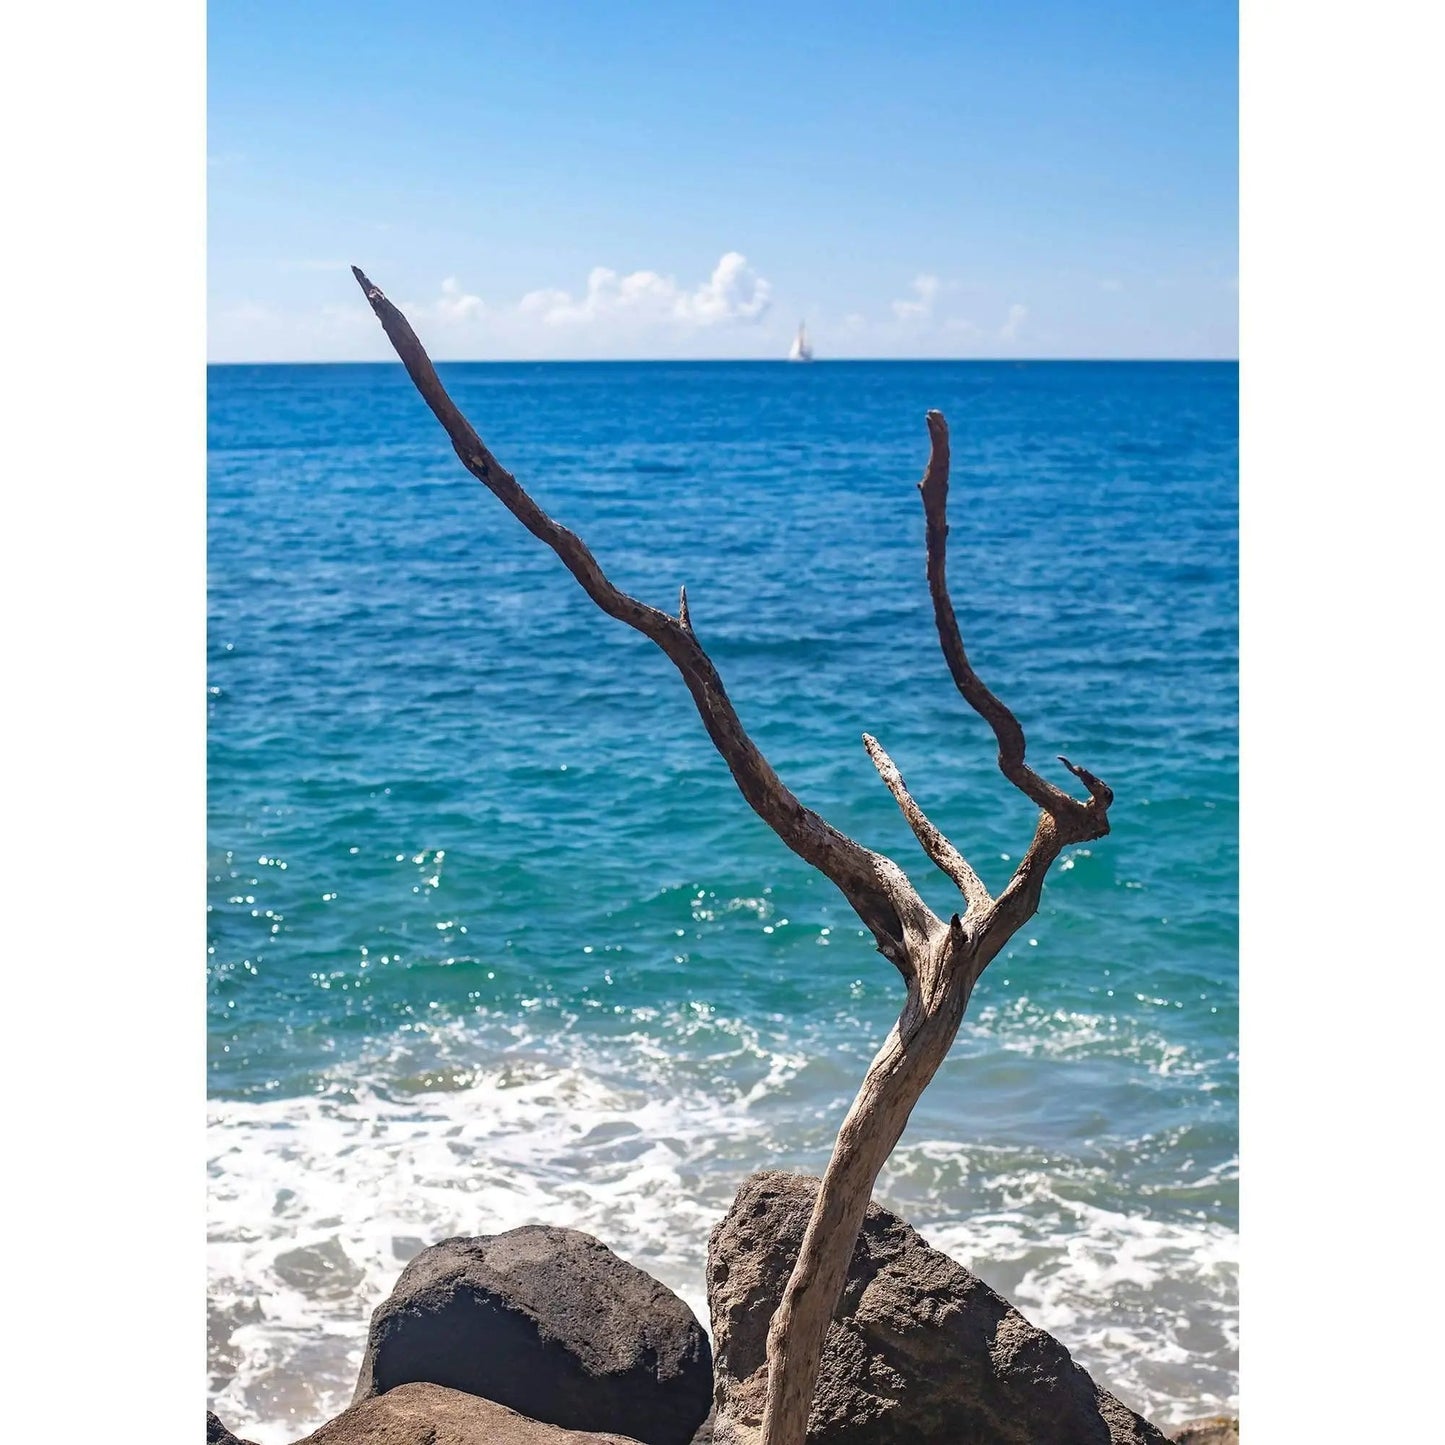 old tree growing in rocks surrounded by blue ocean water